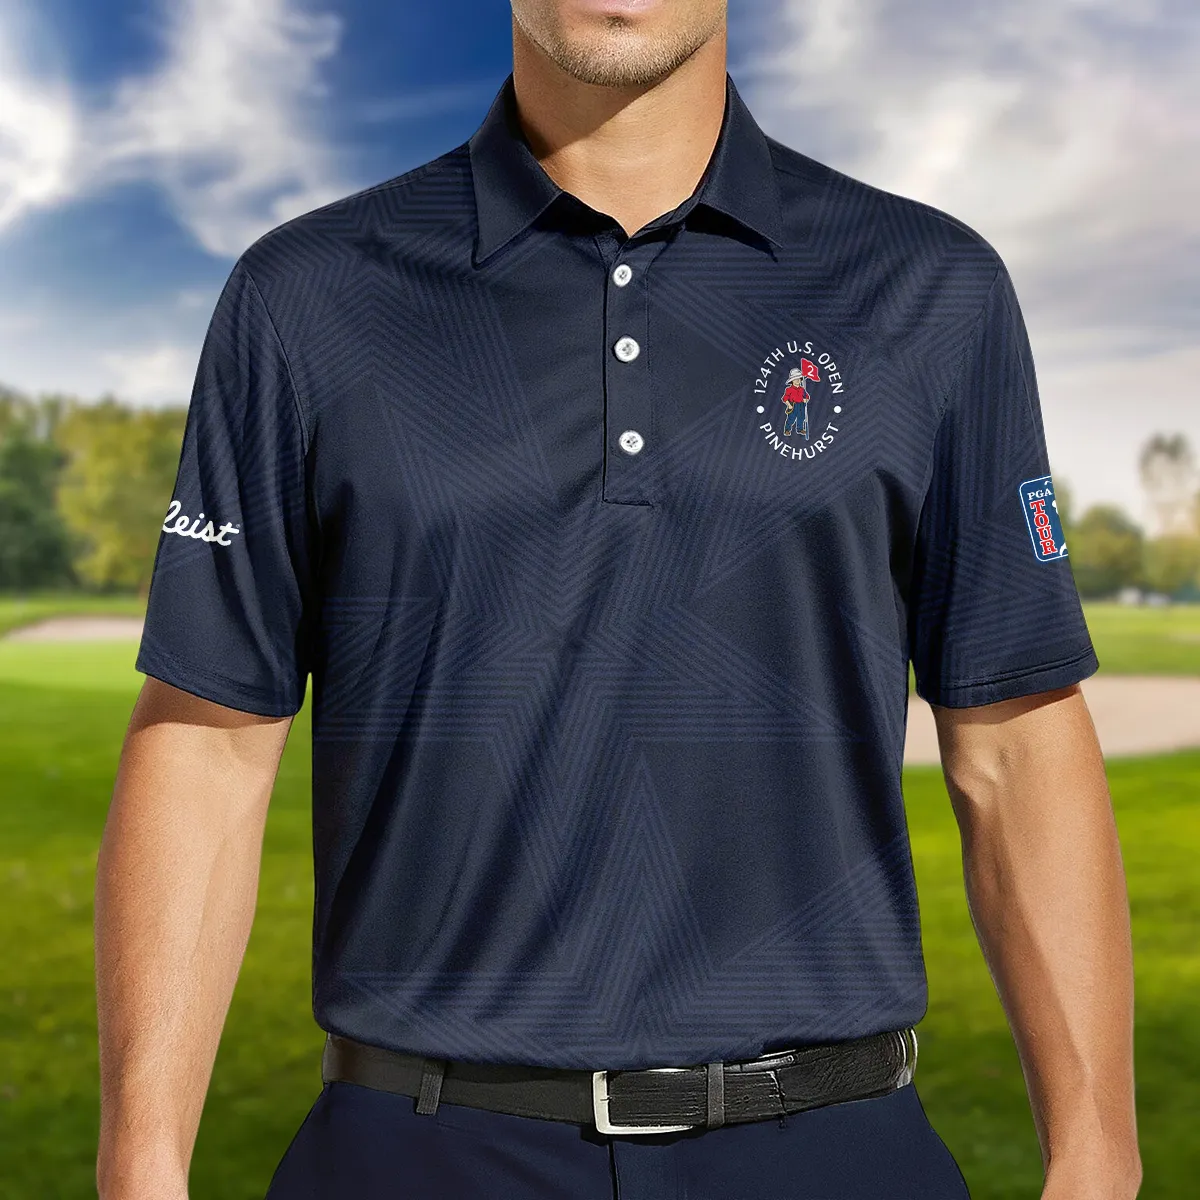 Golf Navy Color Star Pattern 124th U.S. Open Pinehurst Titlest Sleeveless Jacket Style Classic